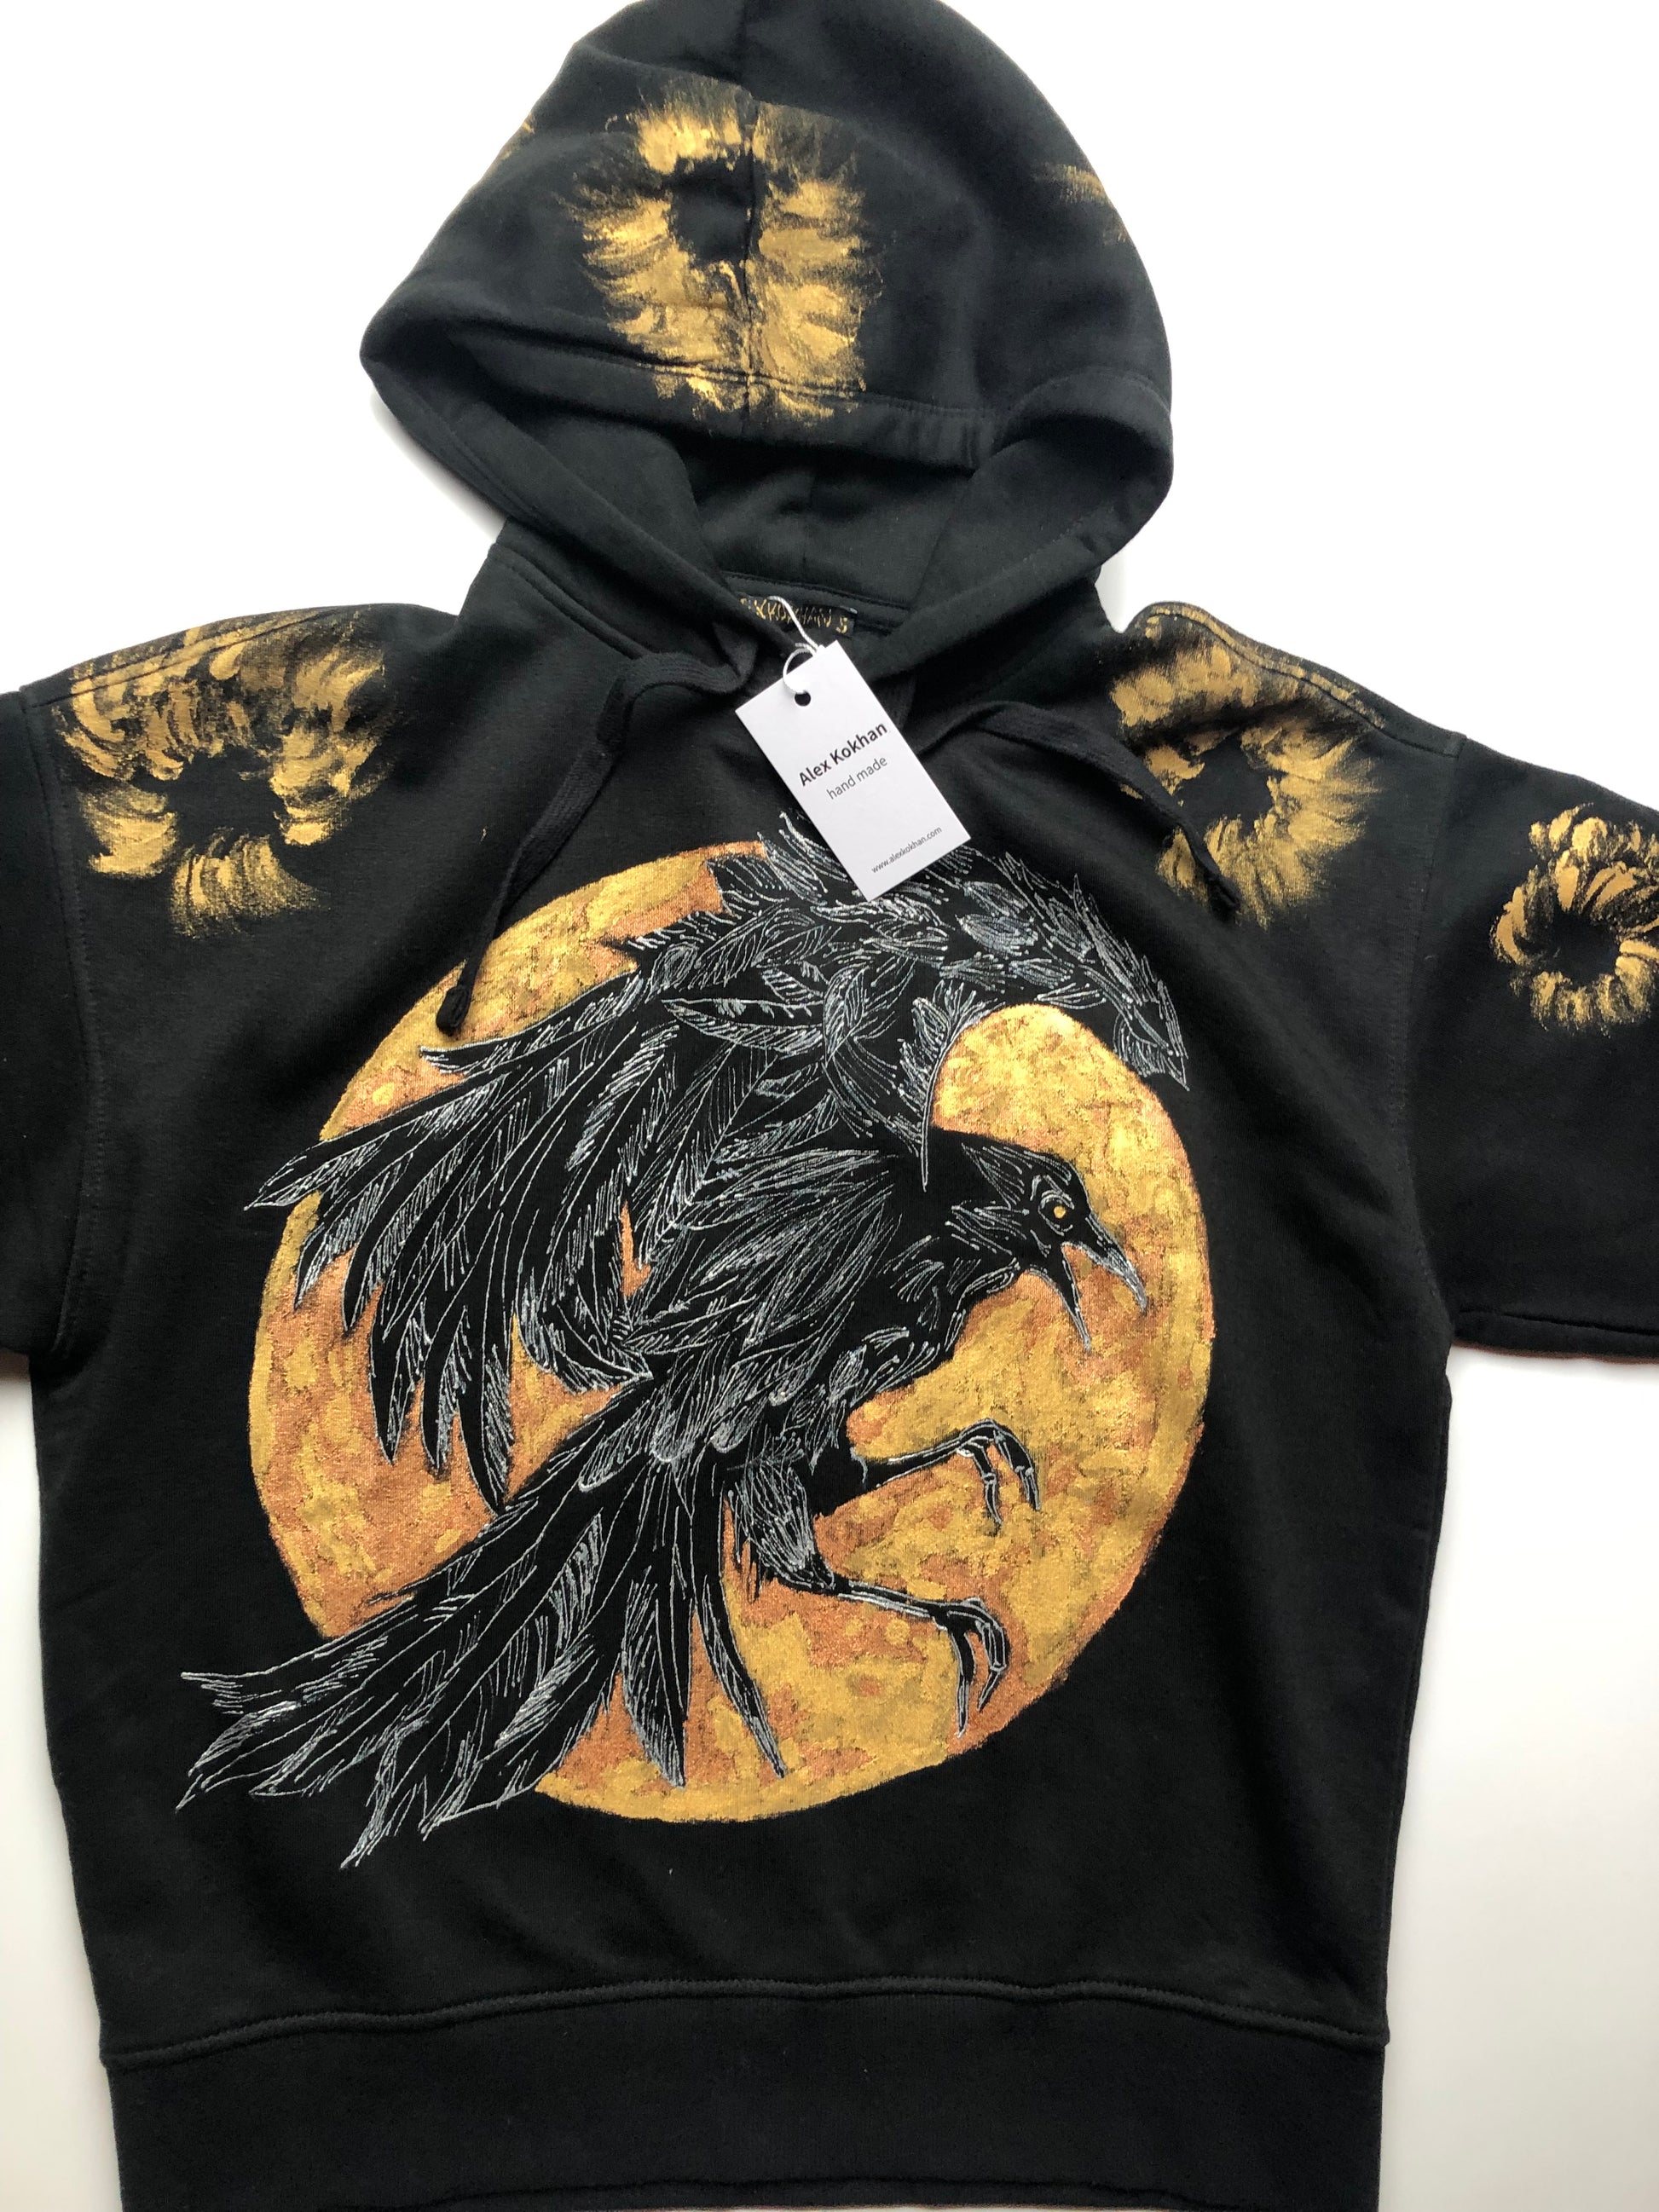 Women's black hoodie with golden raven pattern details